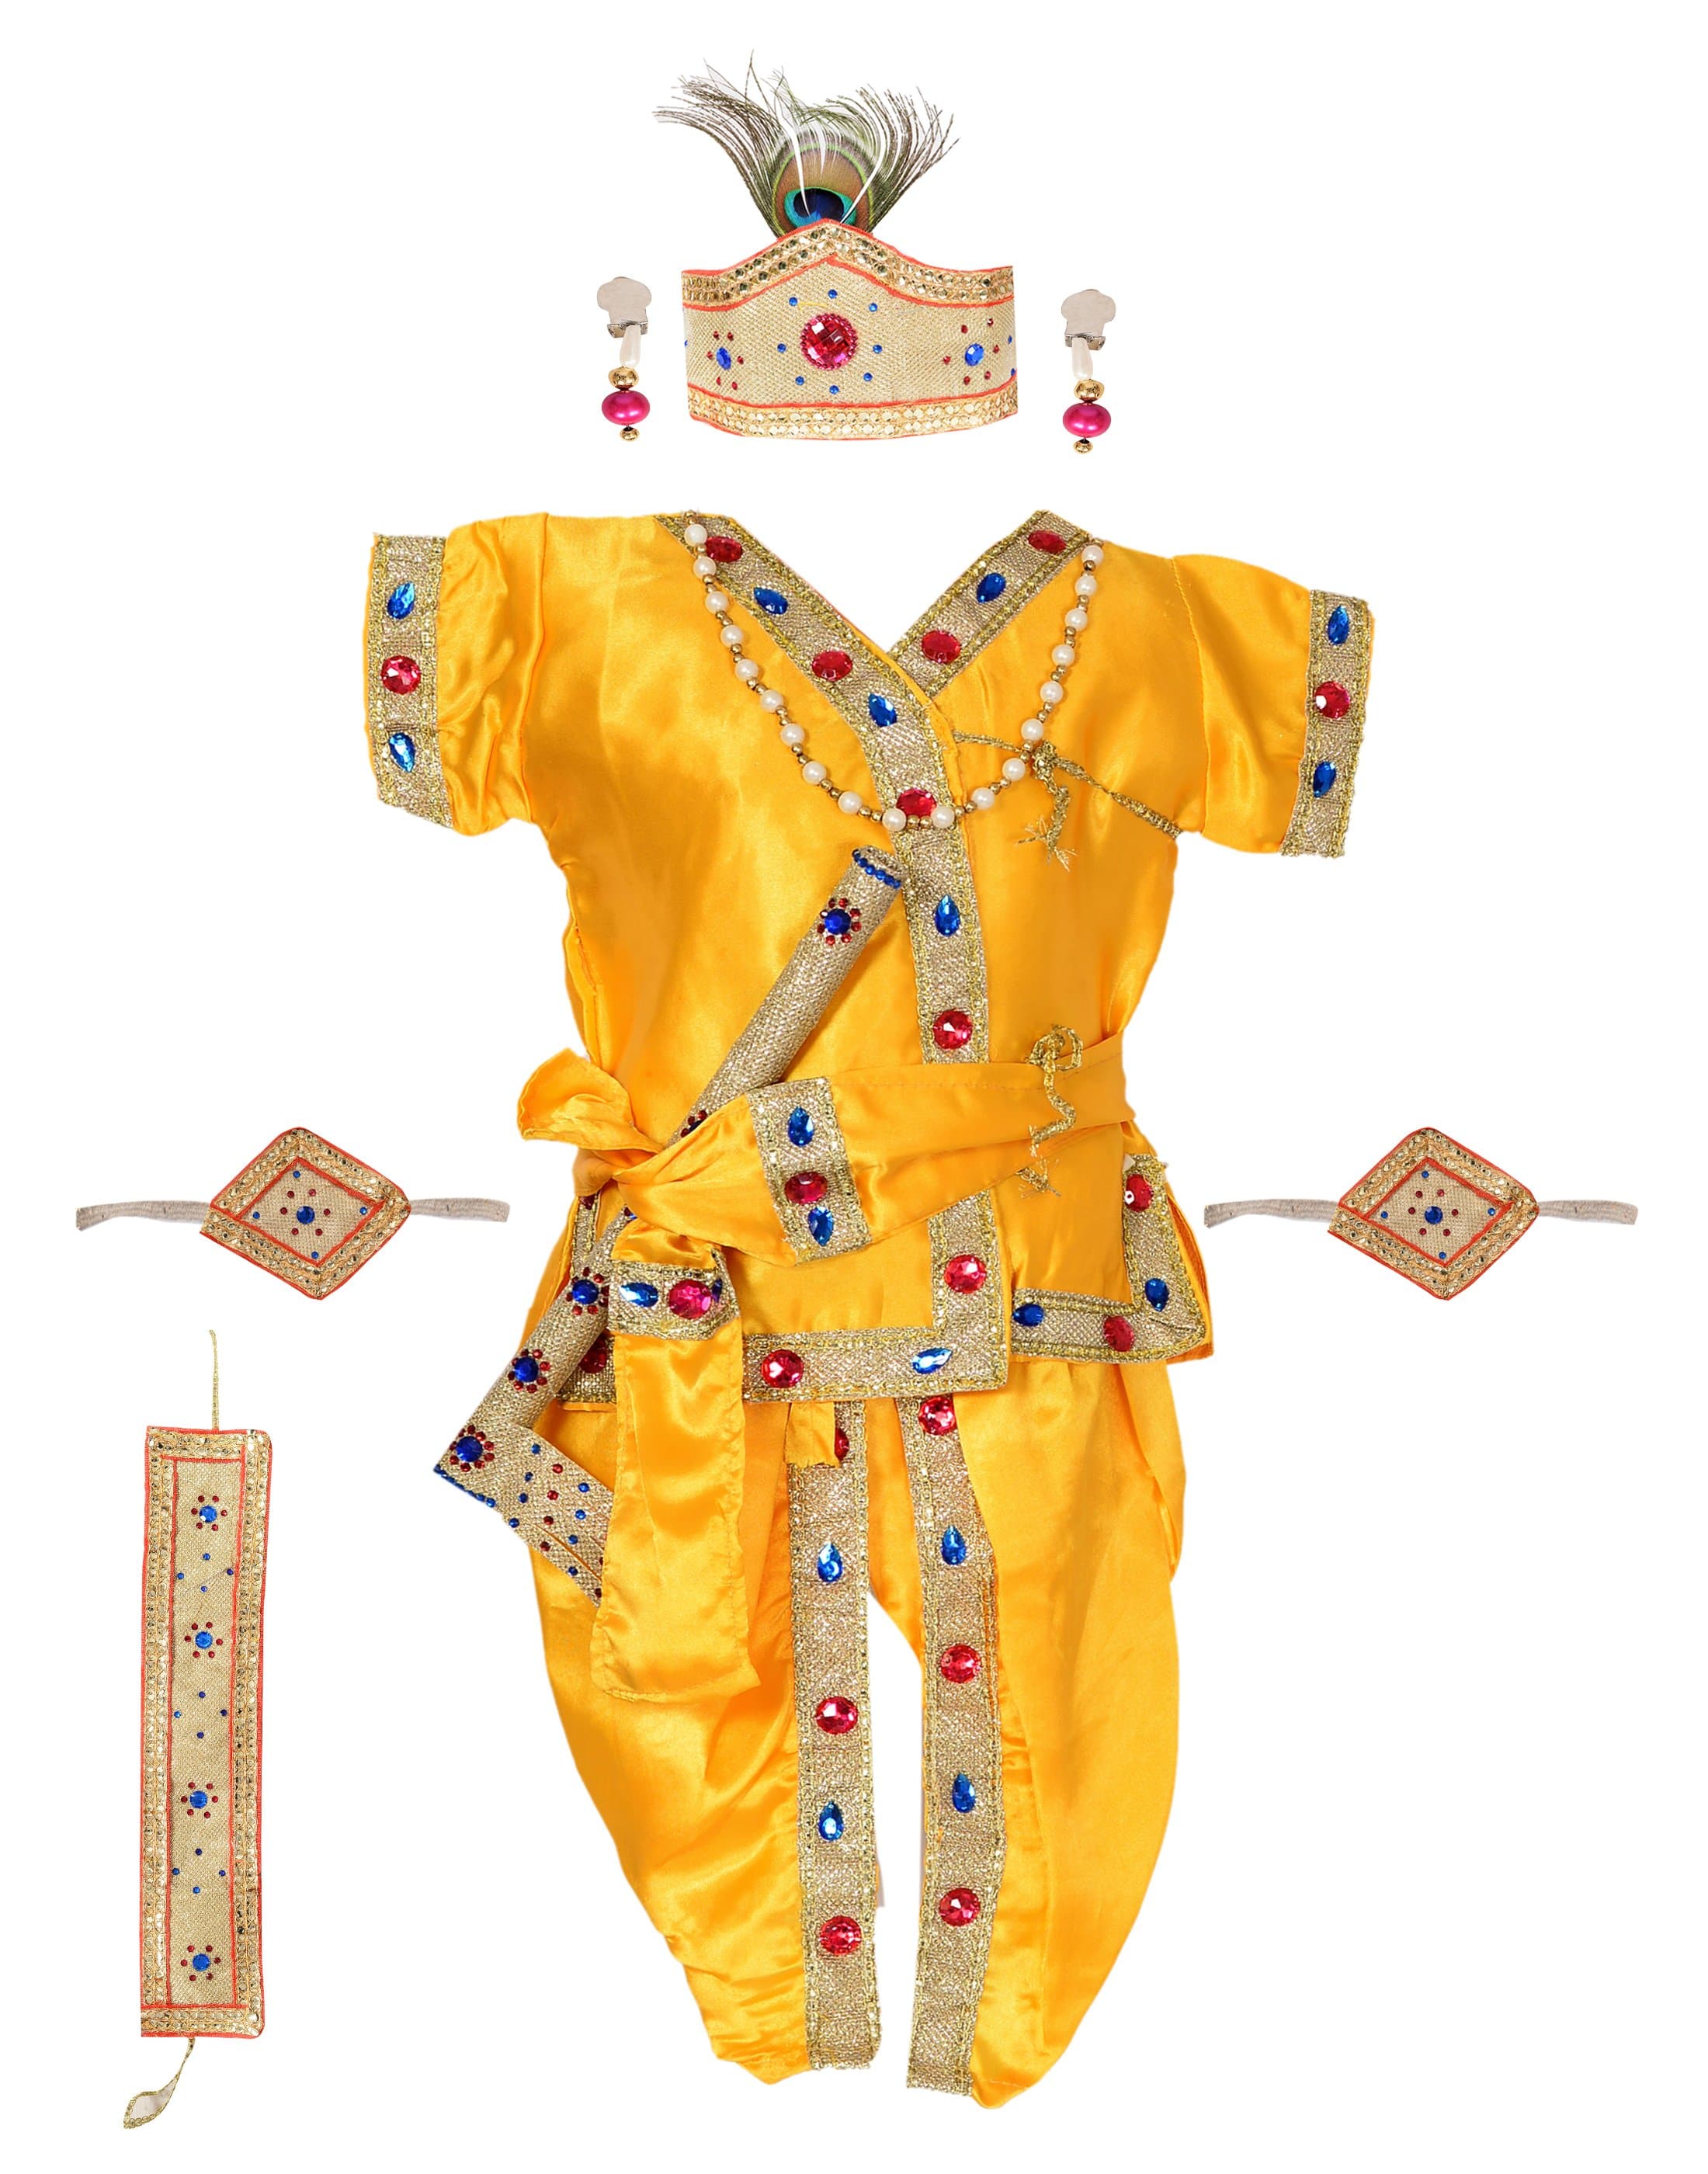 Buy New Inning Associates Krishna Dress for Kids | Shri krishna dress for Baby  Boy | Janmashtami kanha constume for boy and girl age 3 months 6 months.  (12) at Amazon.in